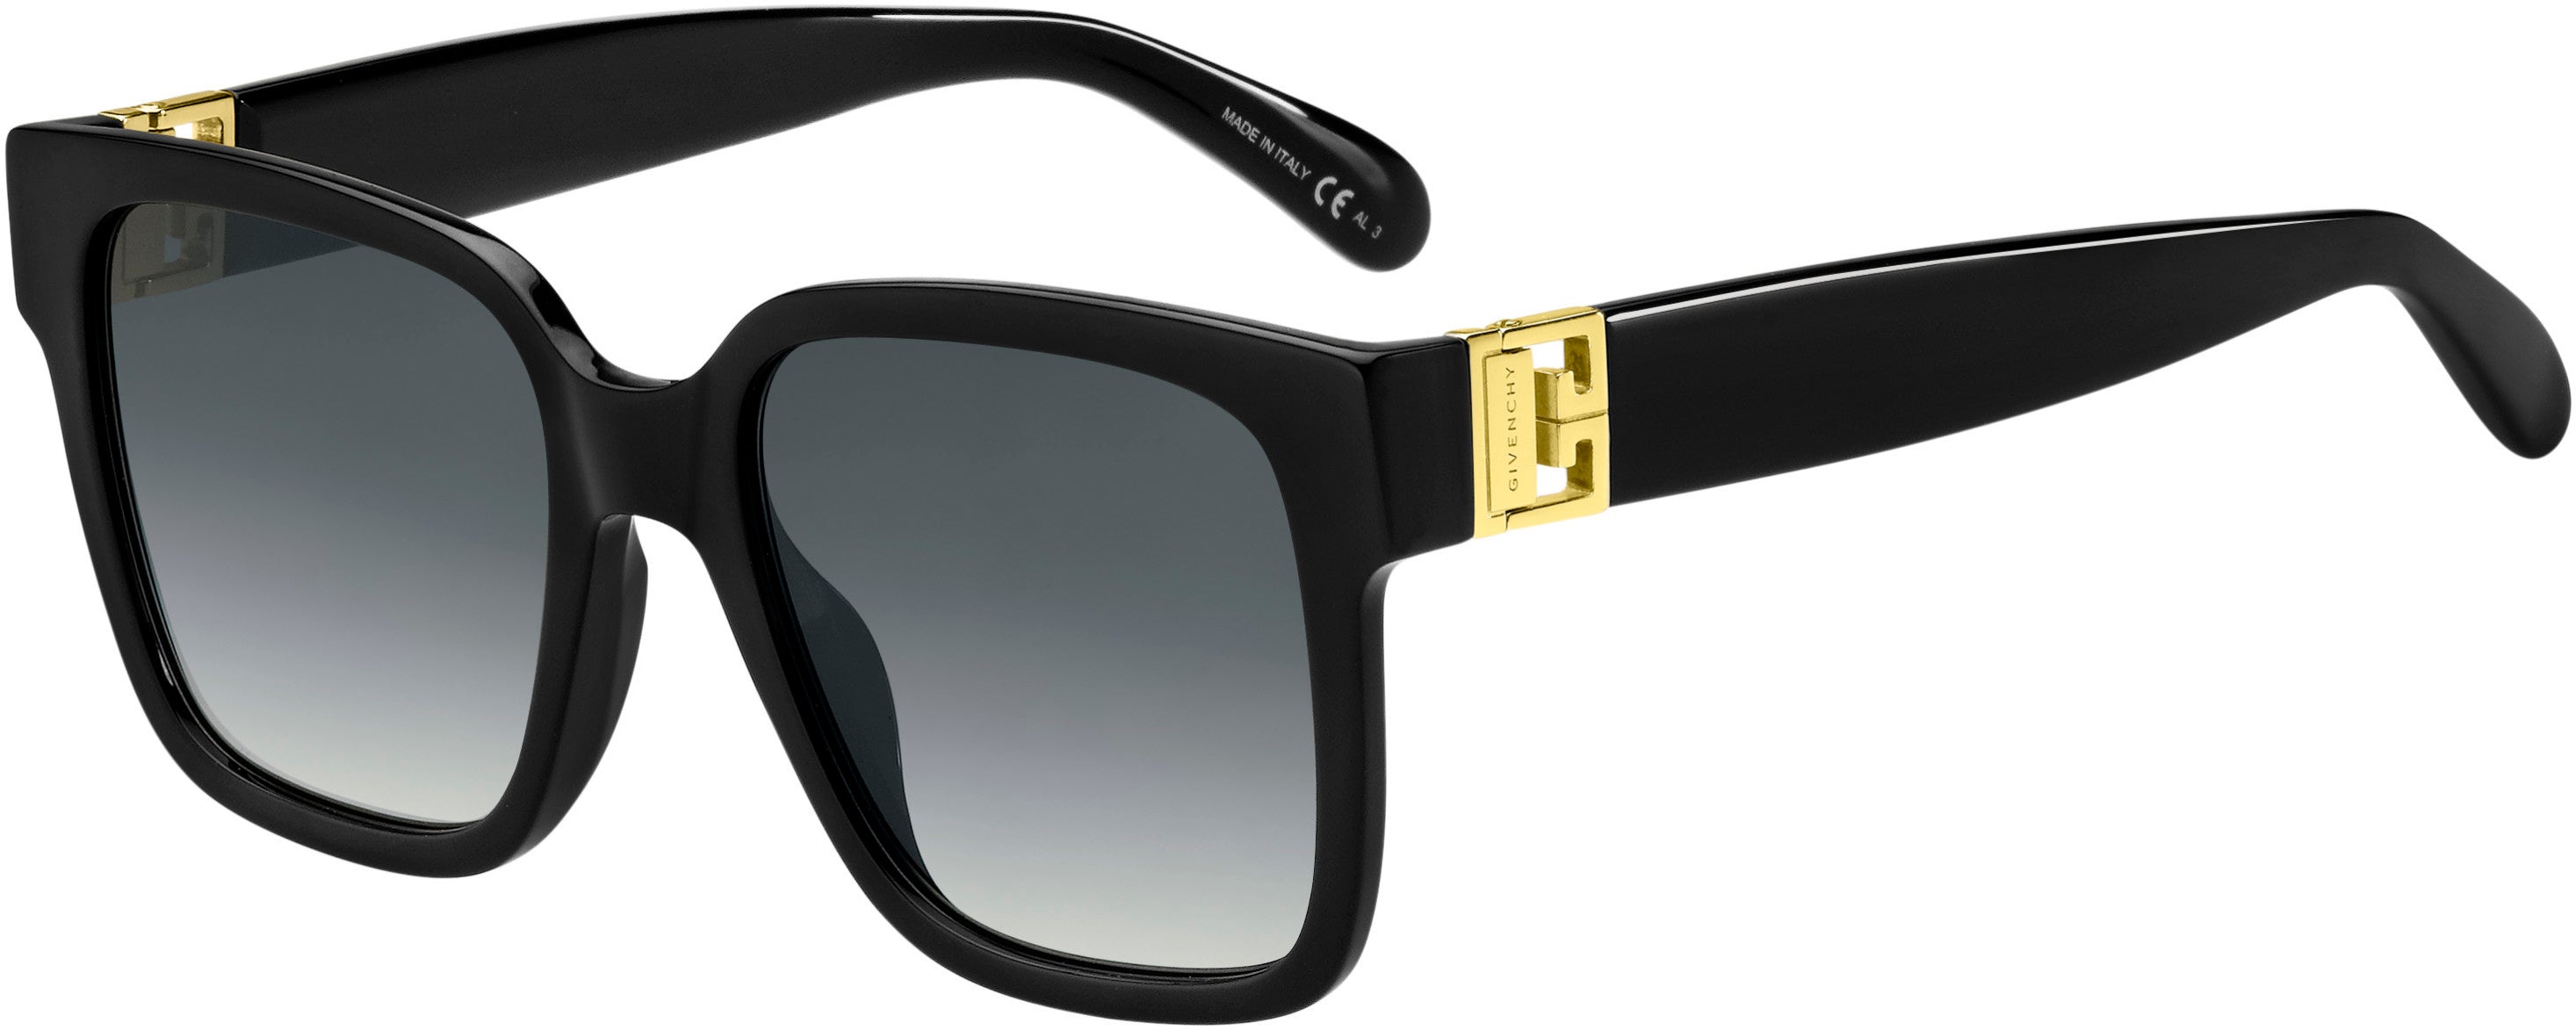  Givenchy 7141/G/S Square Sunglasses 0807-0807  Black (9O Dark Gray Gradient)